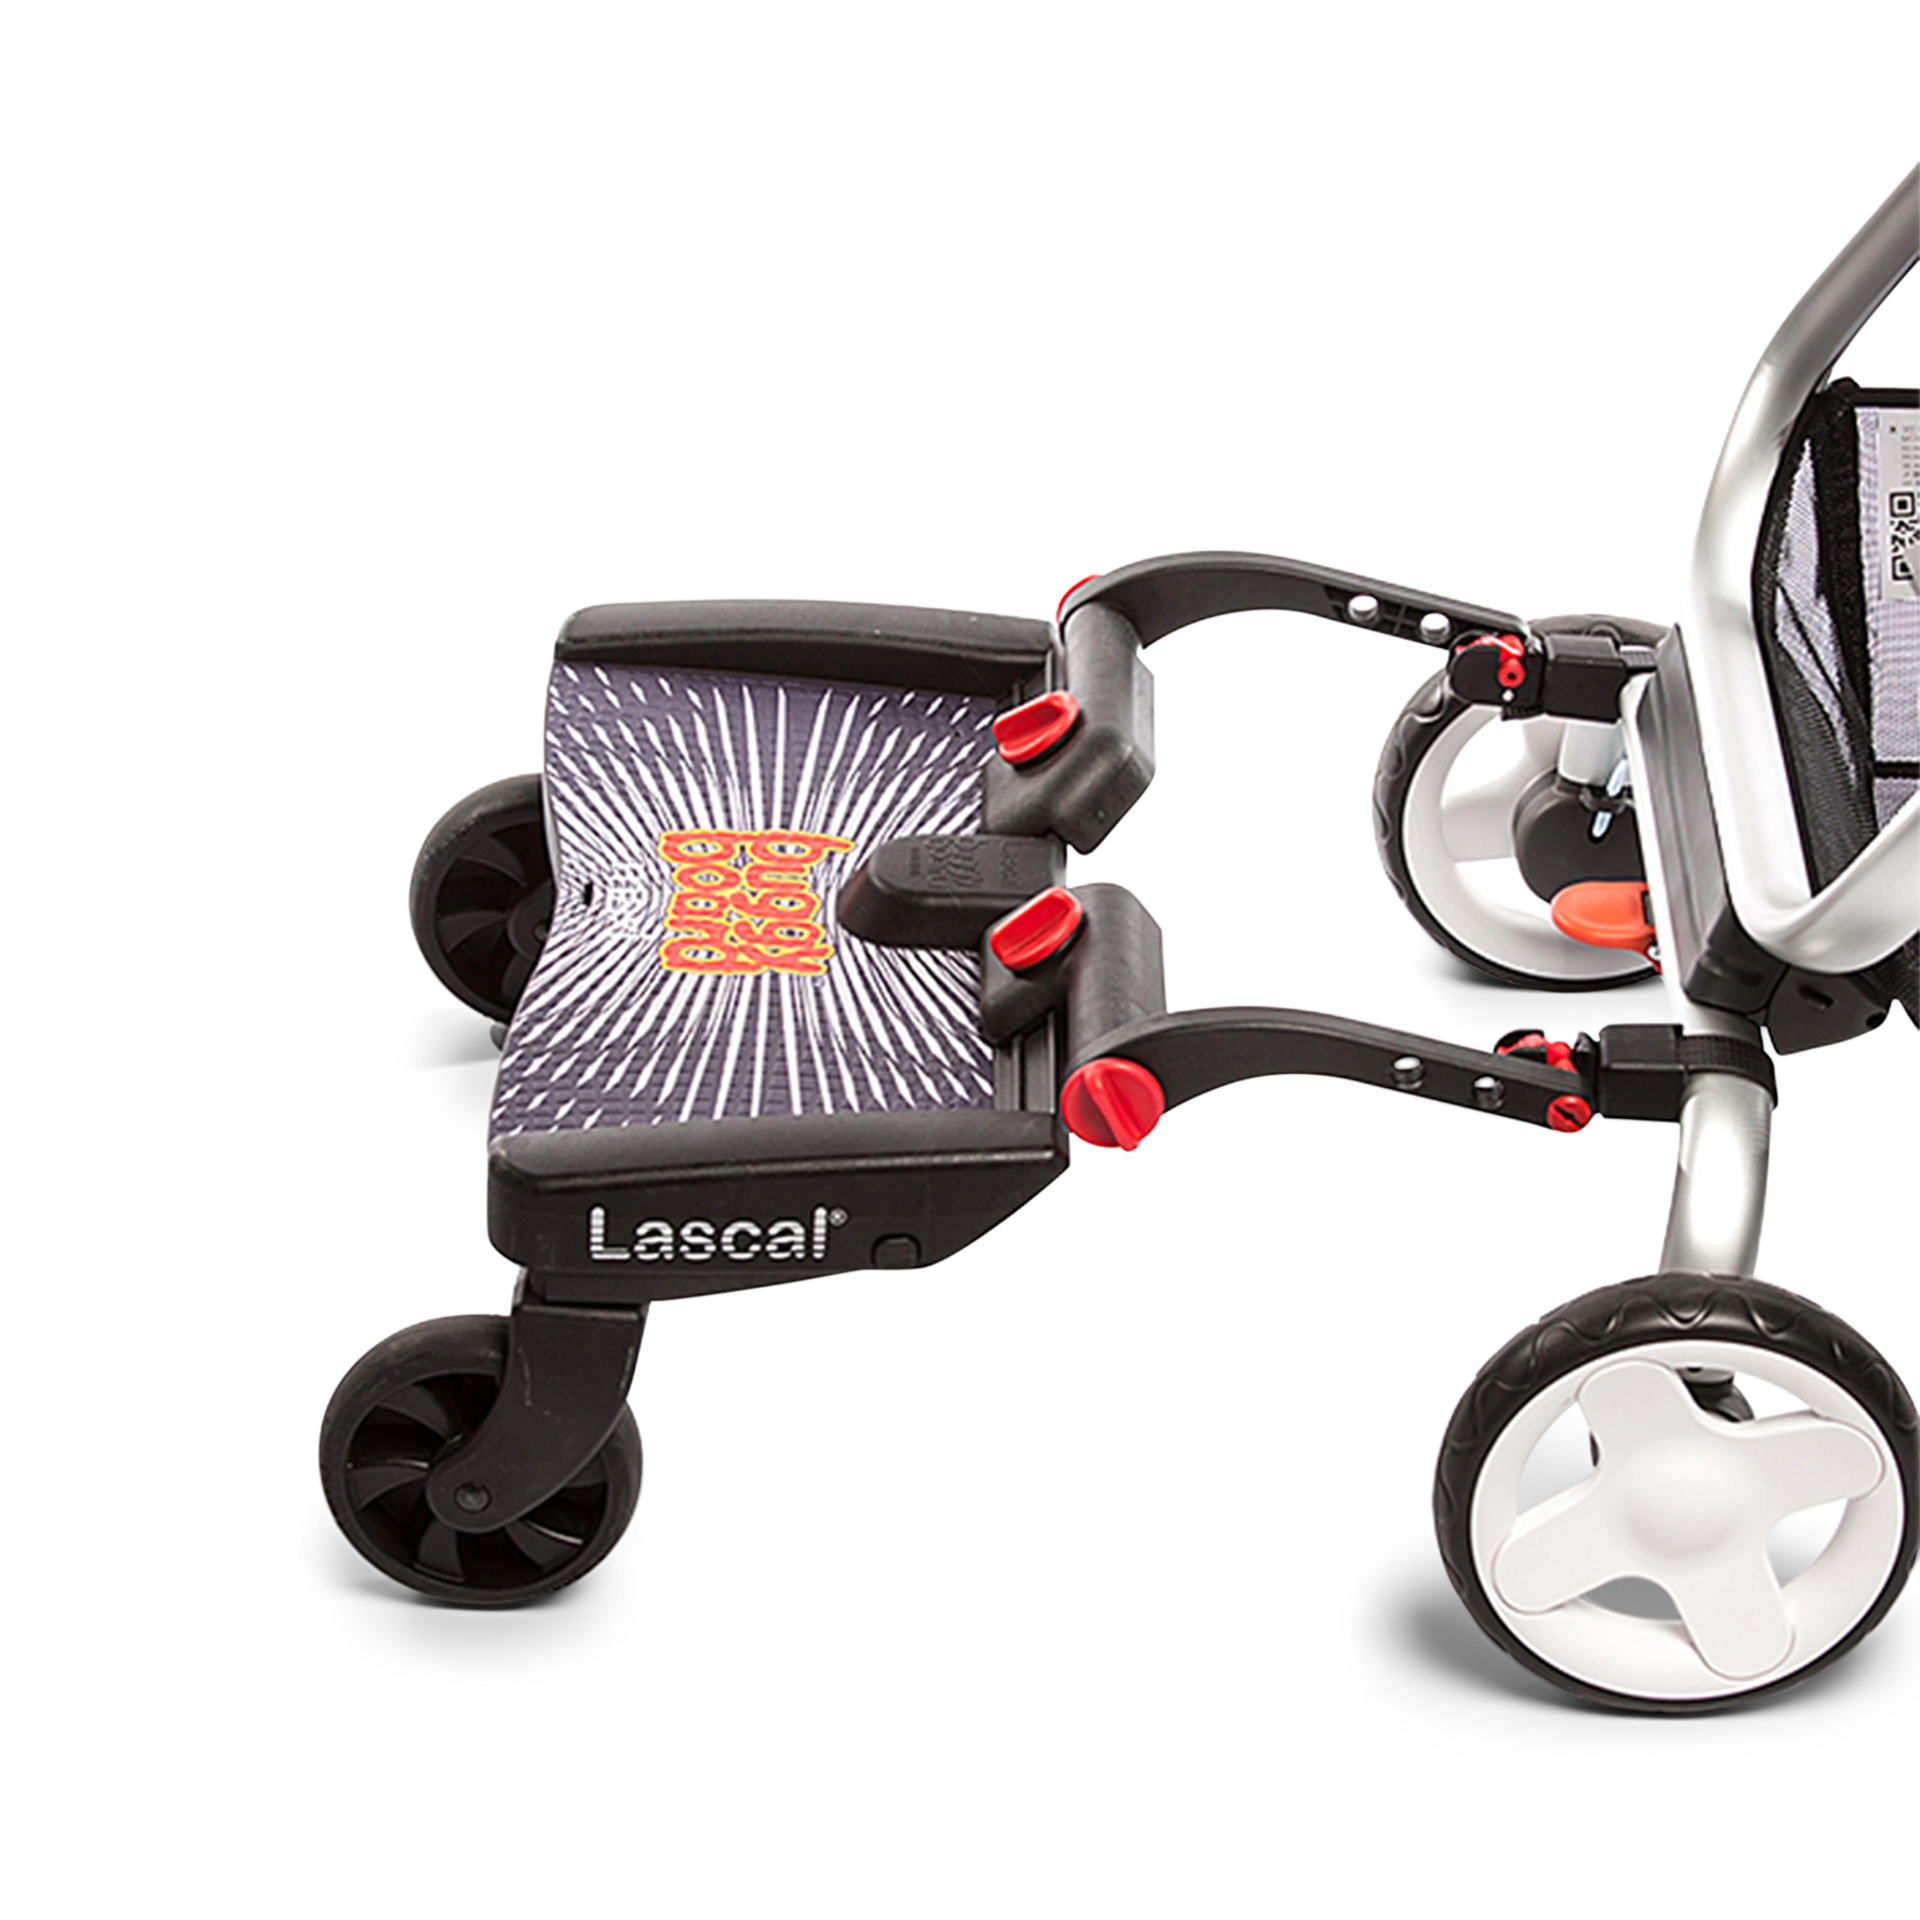 lascal buggy board maxi compatibility list